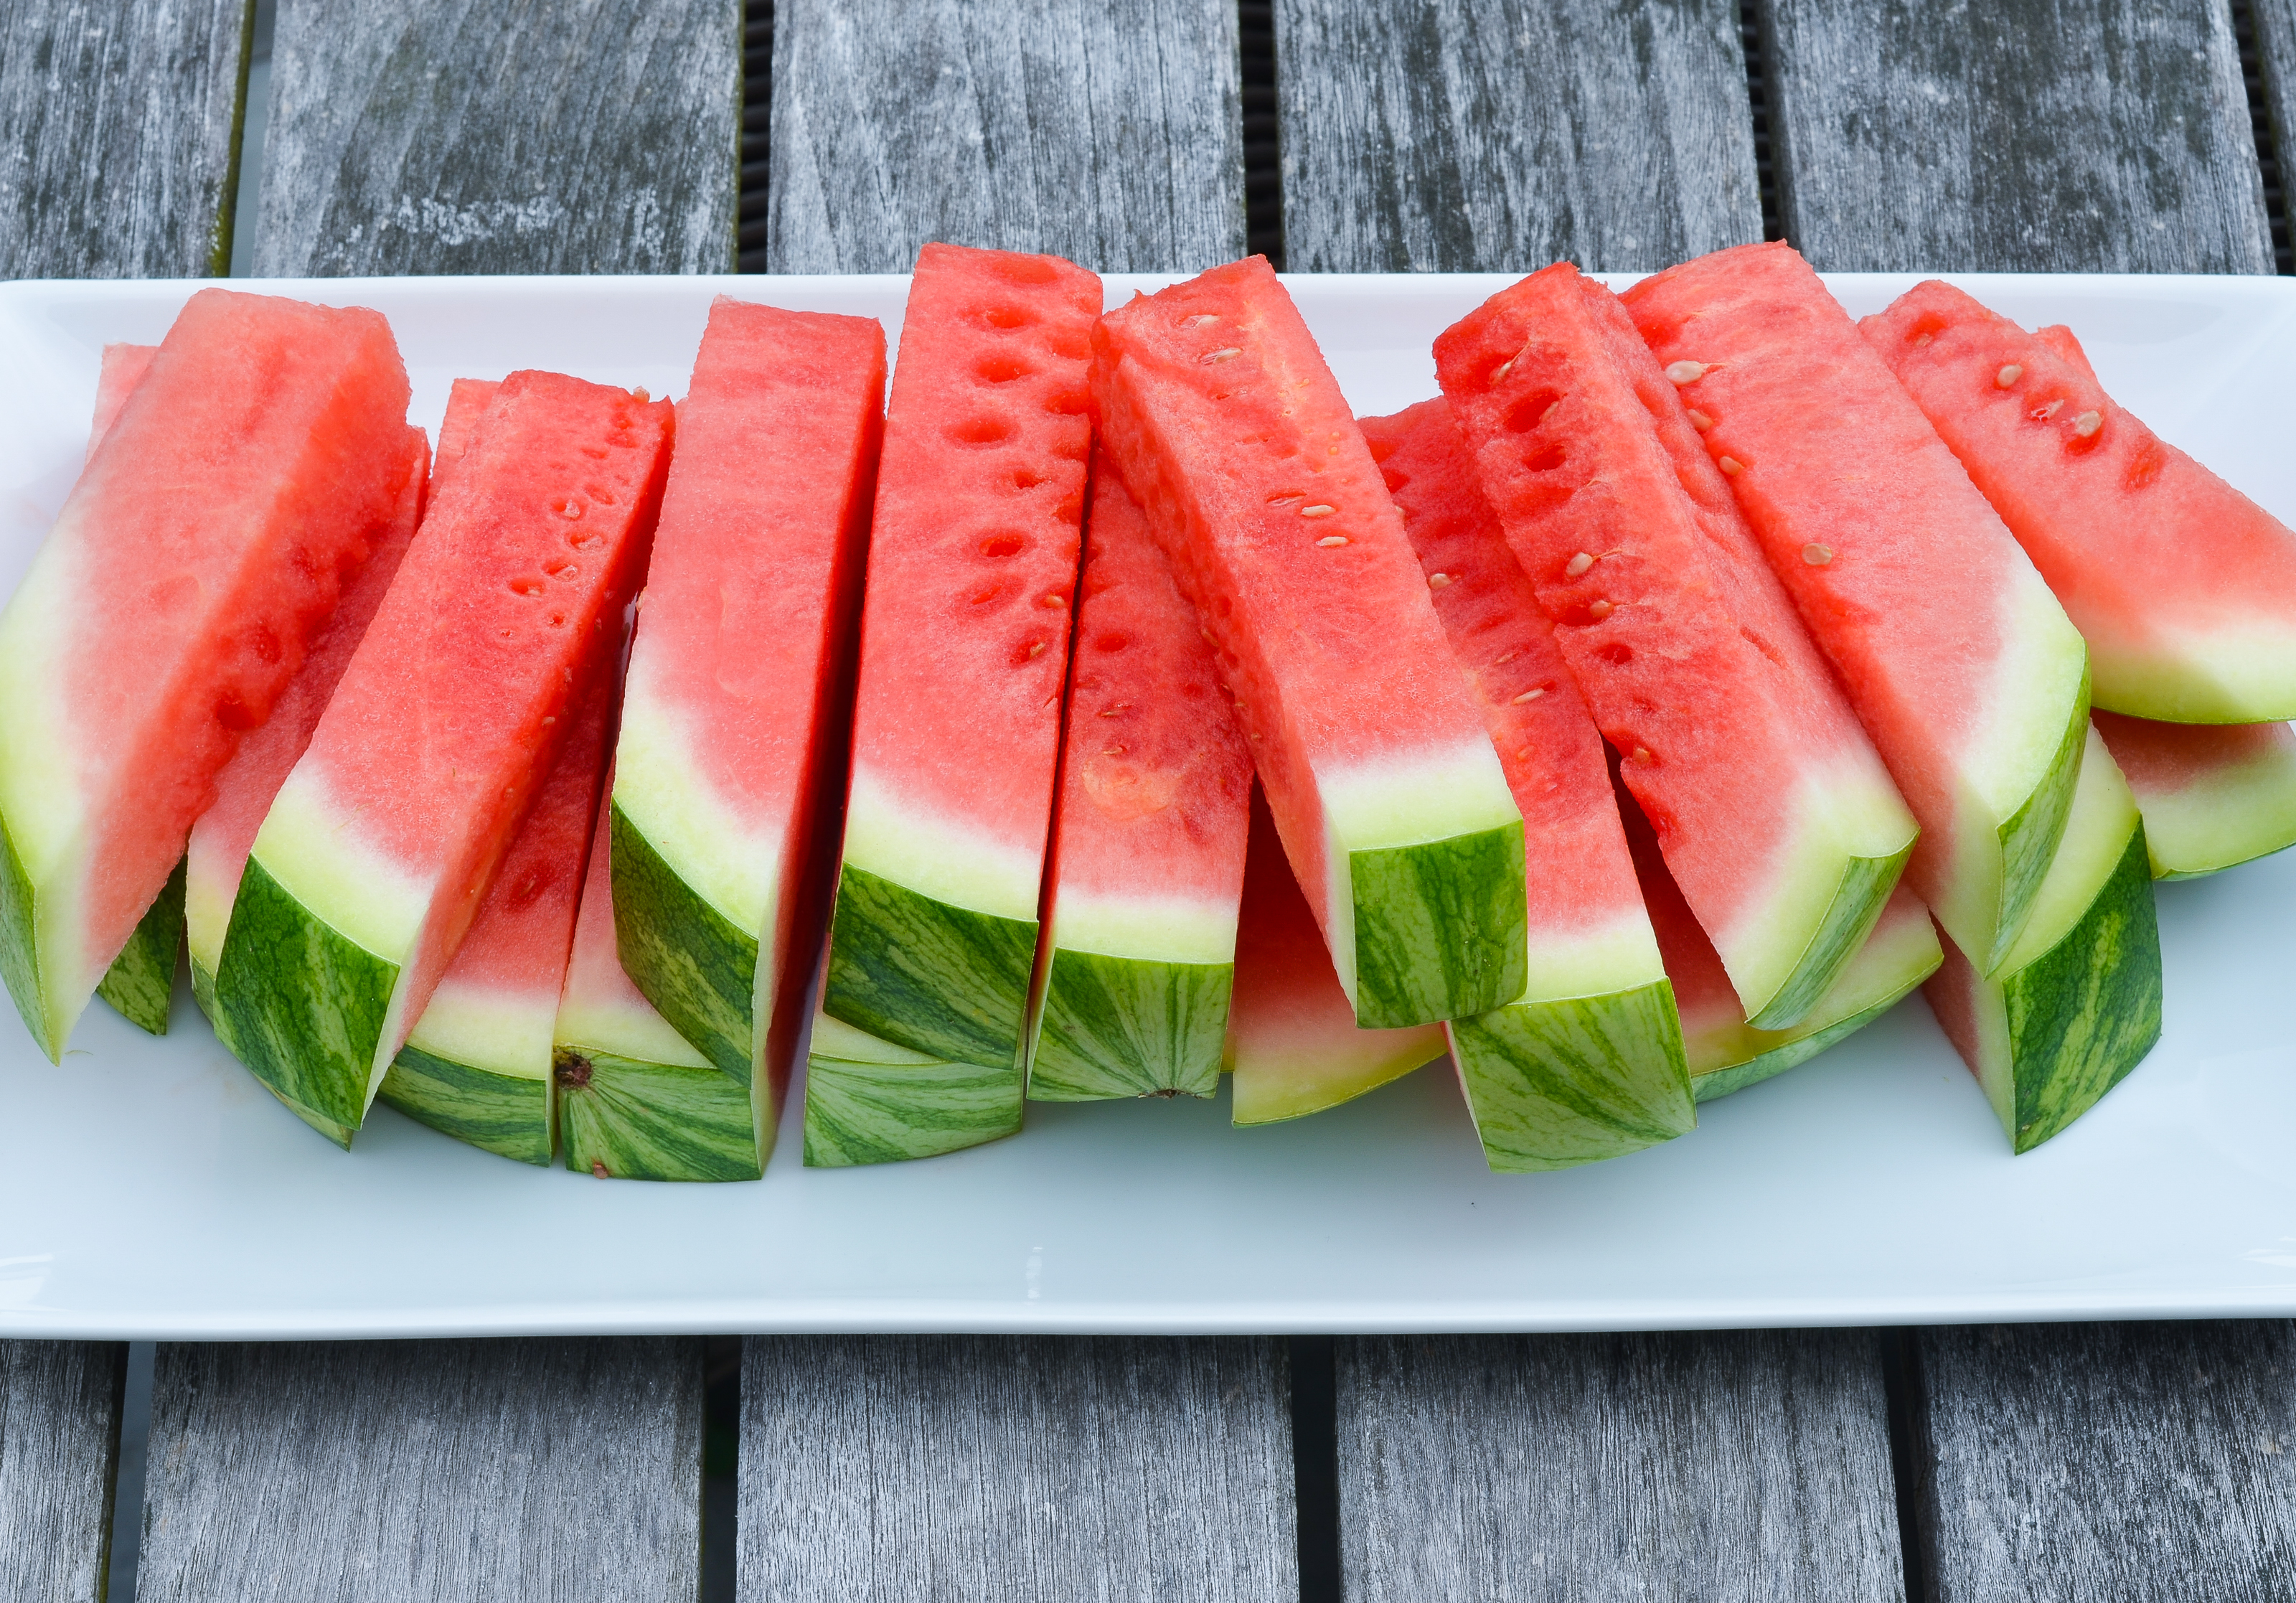 watermelon fruit platter